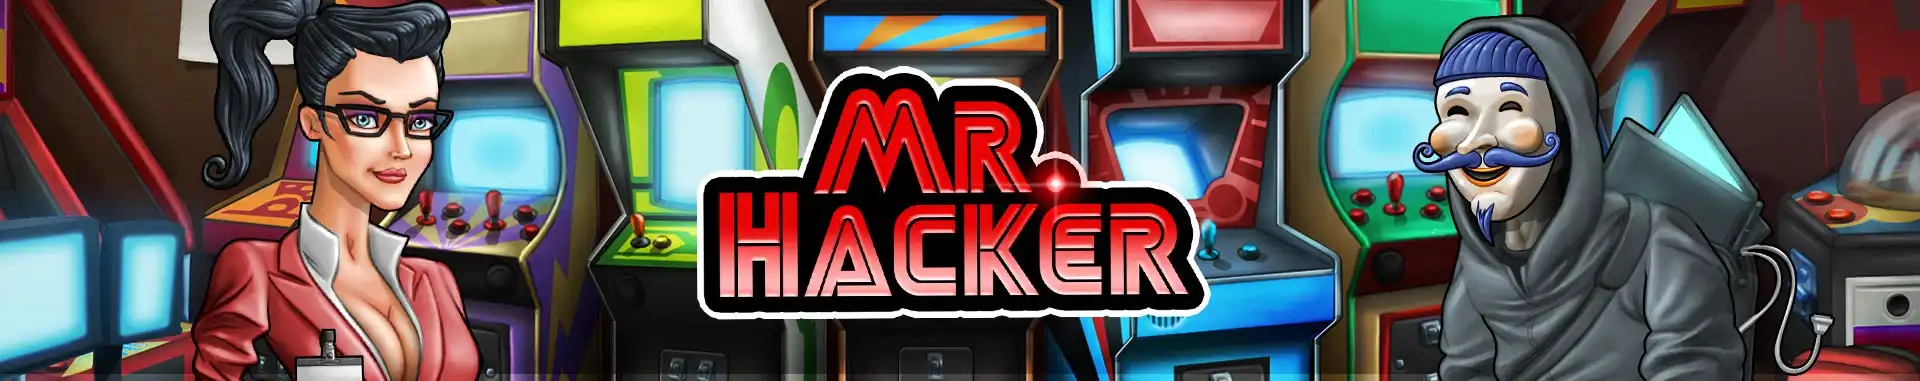 Tragaperras Online Mr. Hacker